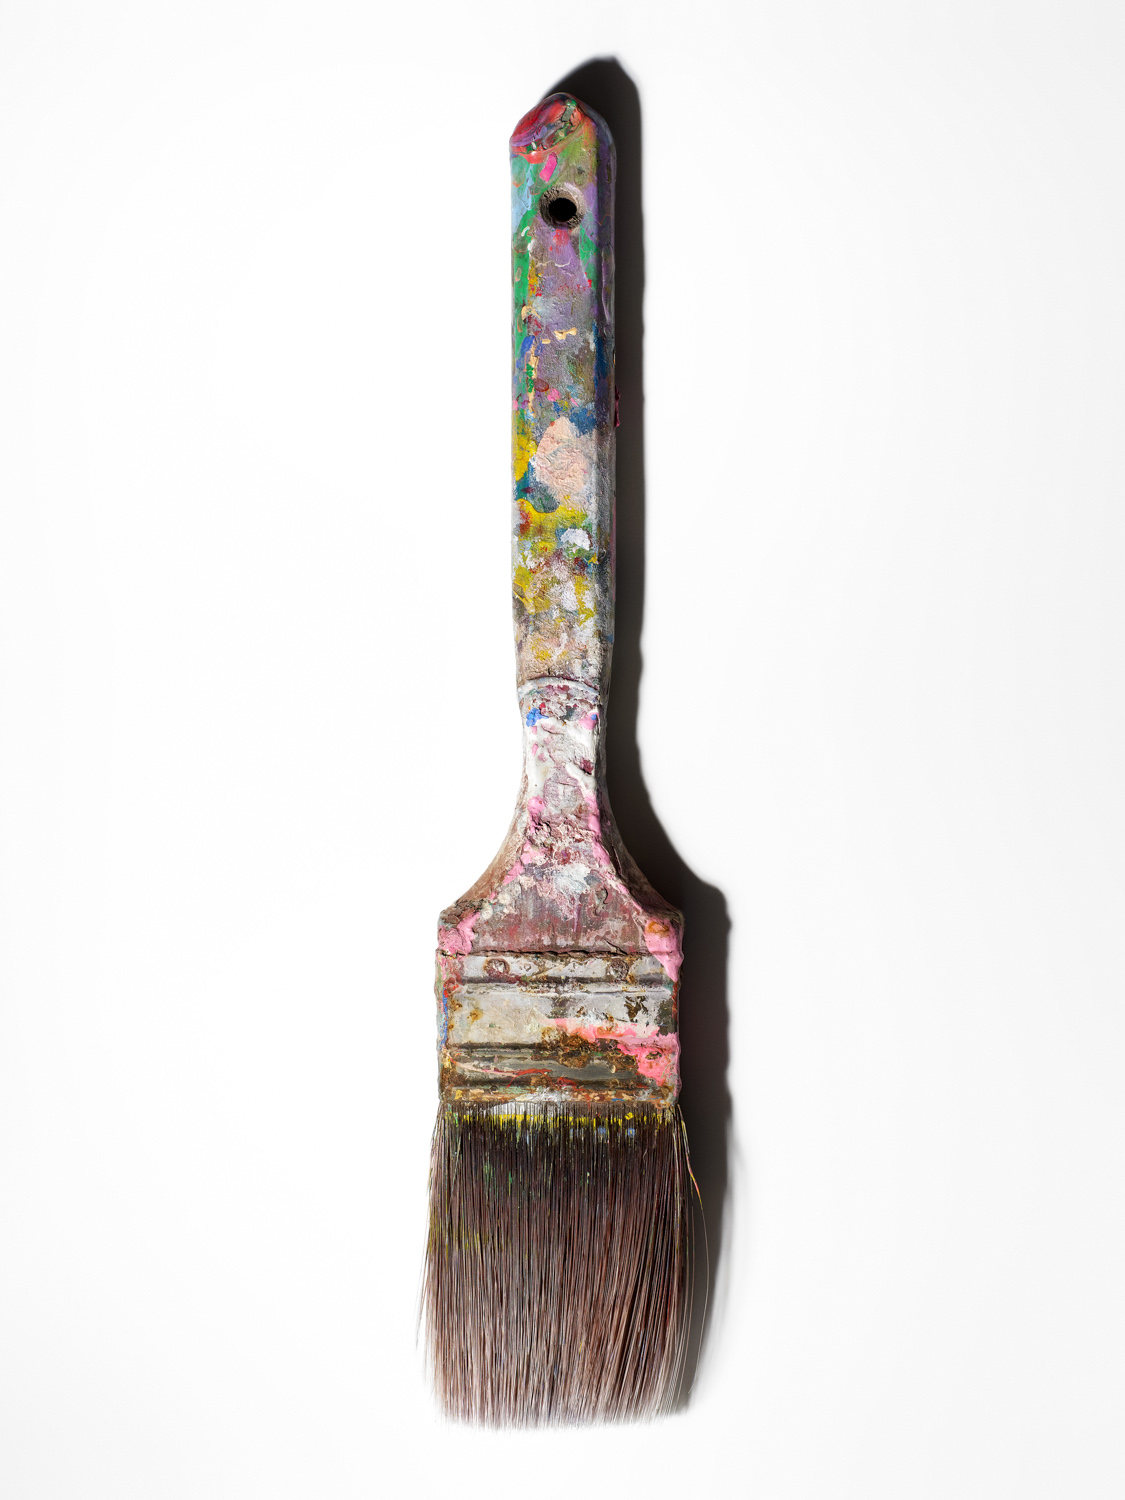 Andy Warhol’s paintbrush. (Henry Leutwyler) 